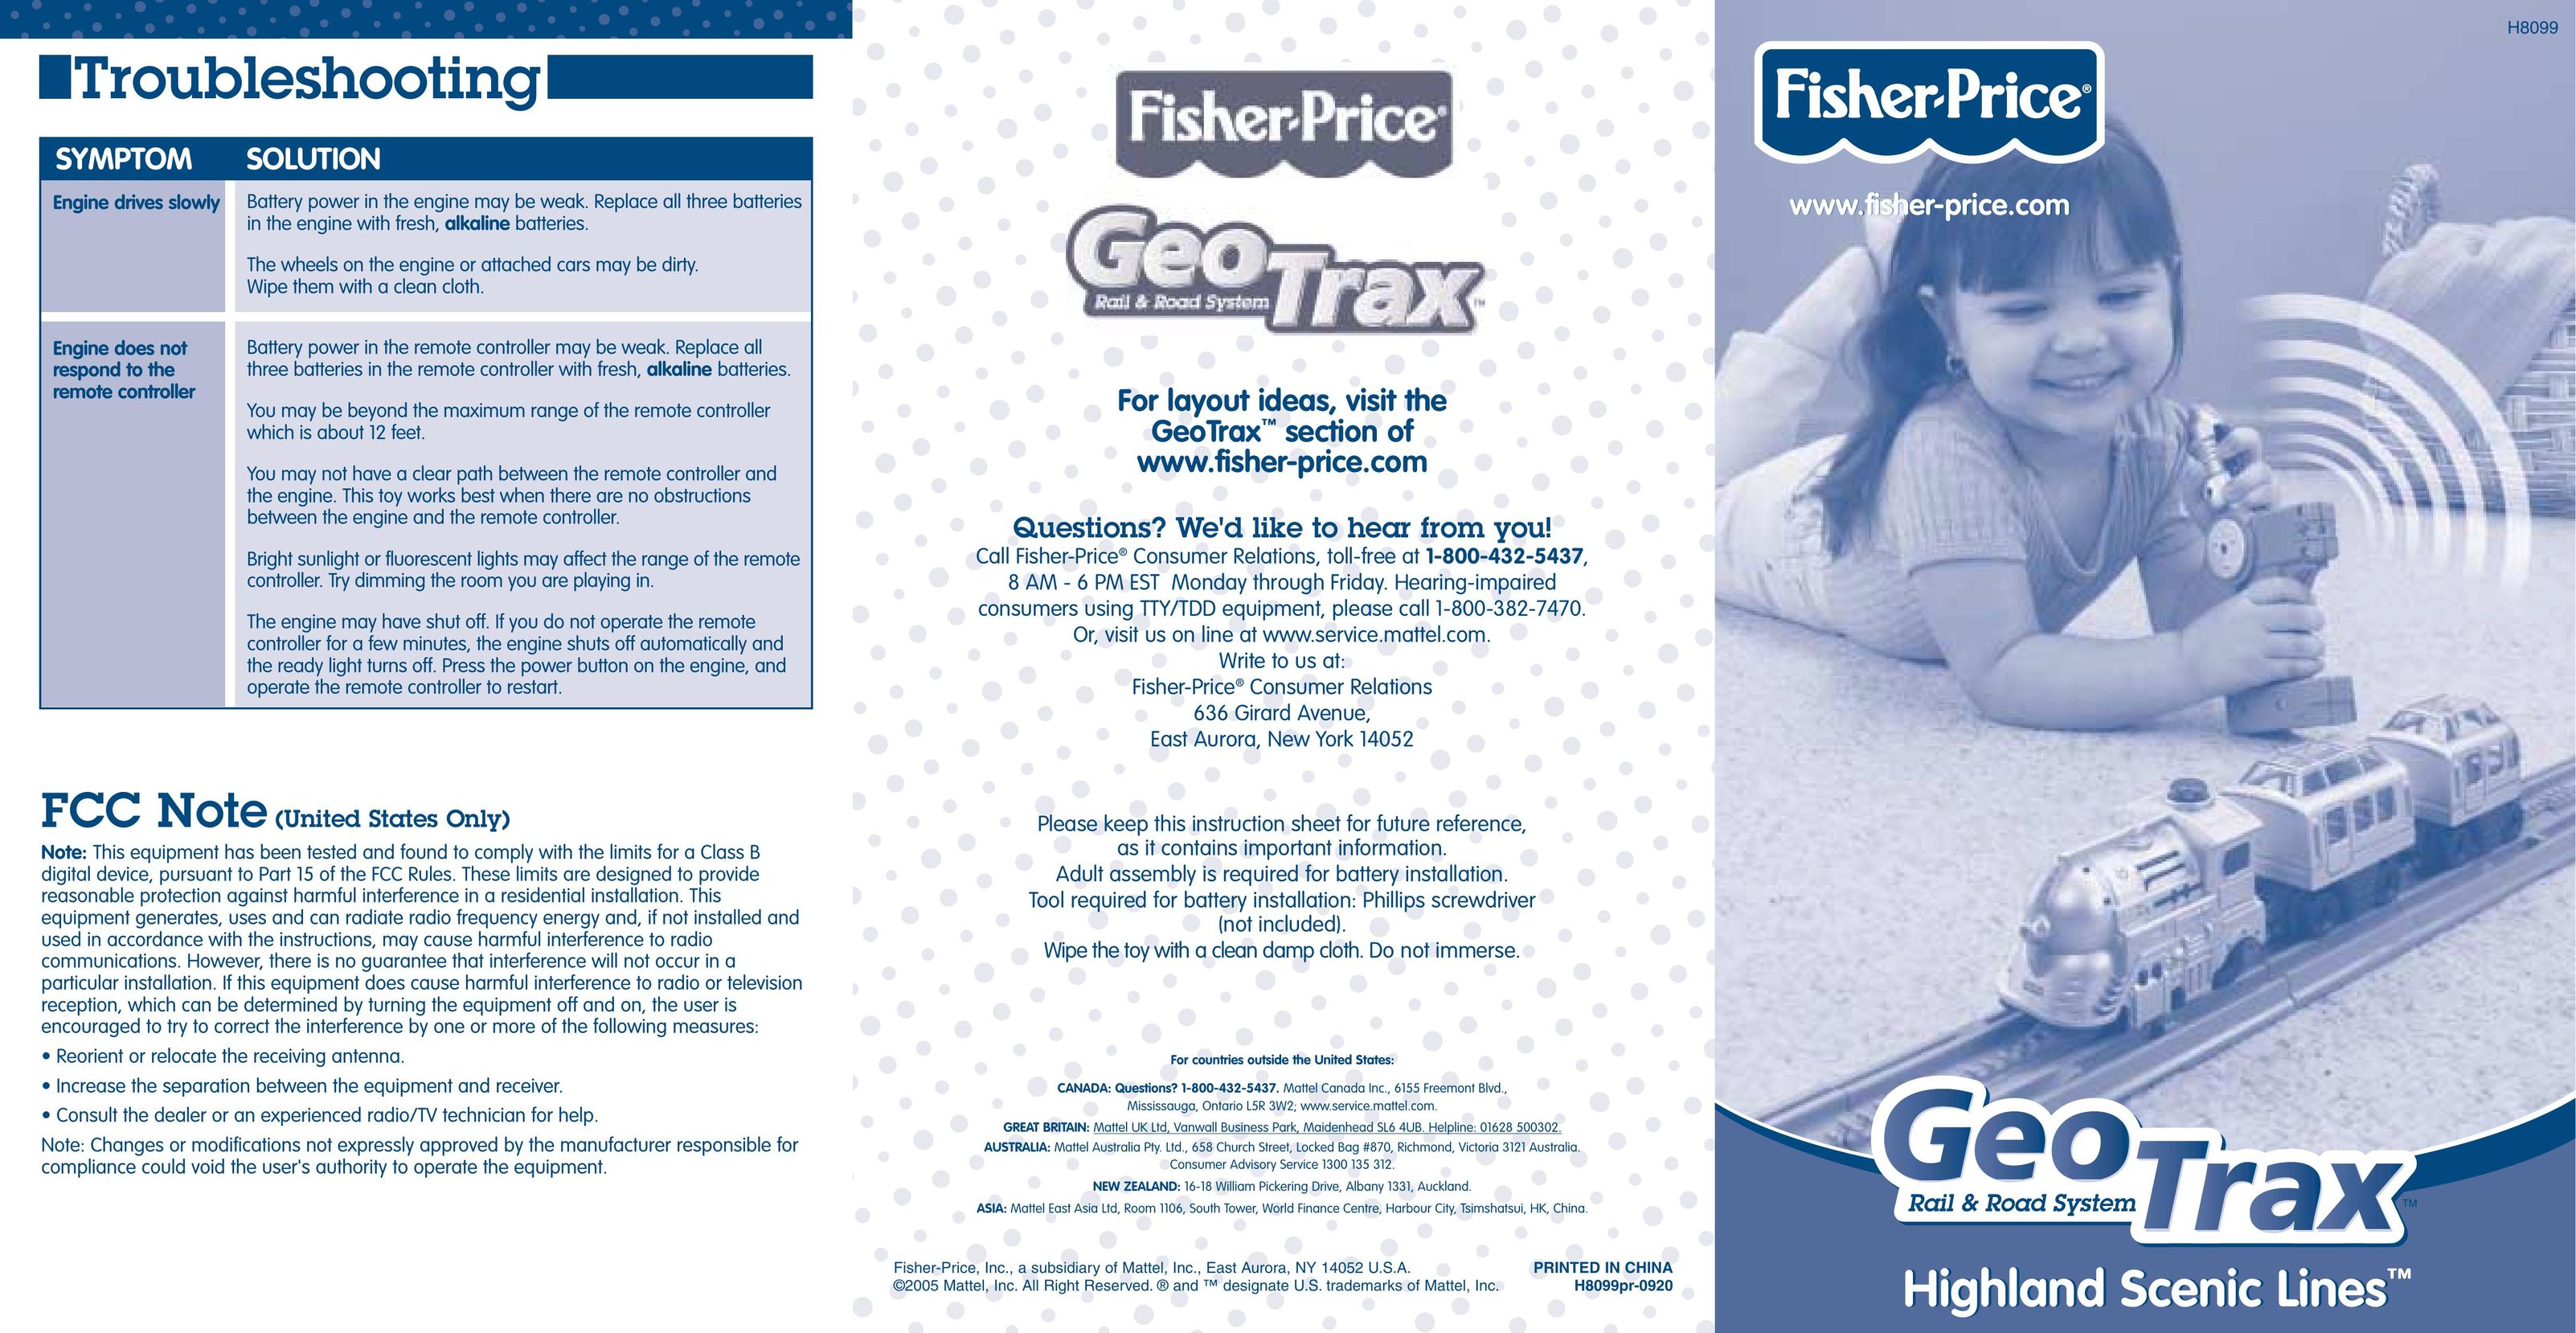 Fisher-Price H8099 Riding Toy User Manual